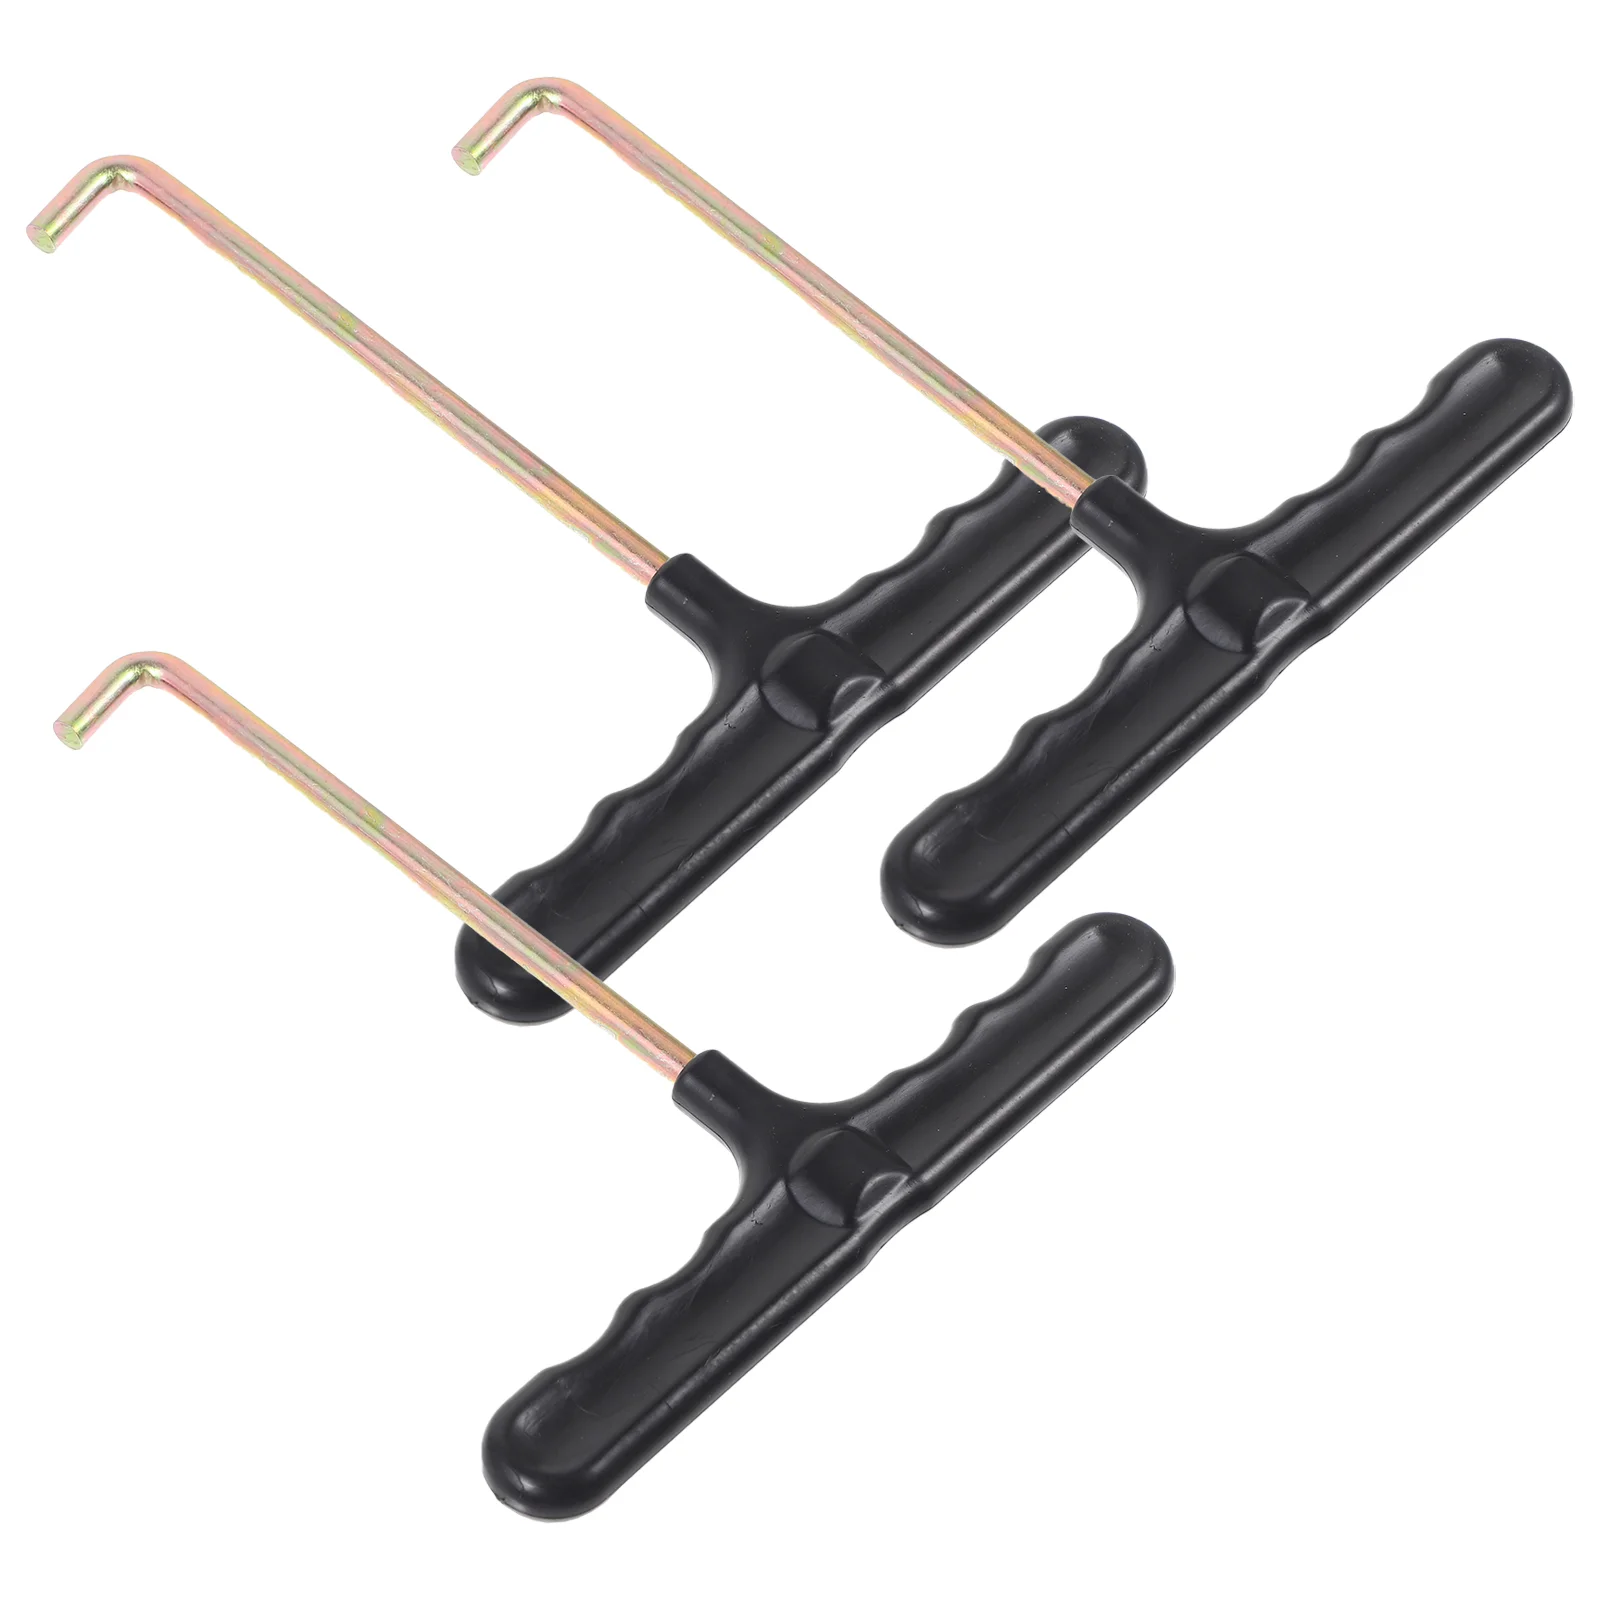 

3 Pcs Tightener Skate Shoe Hook Laces Shoelace Puller for Roller Skates Plastic T-shaped Tightening Hooks